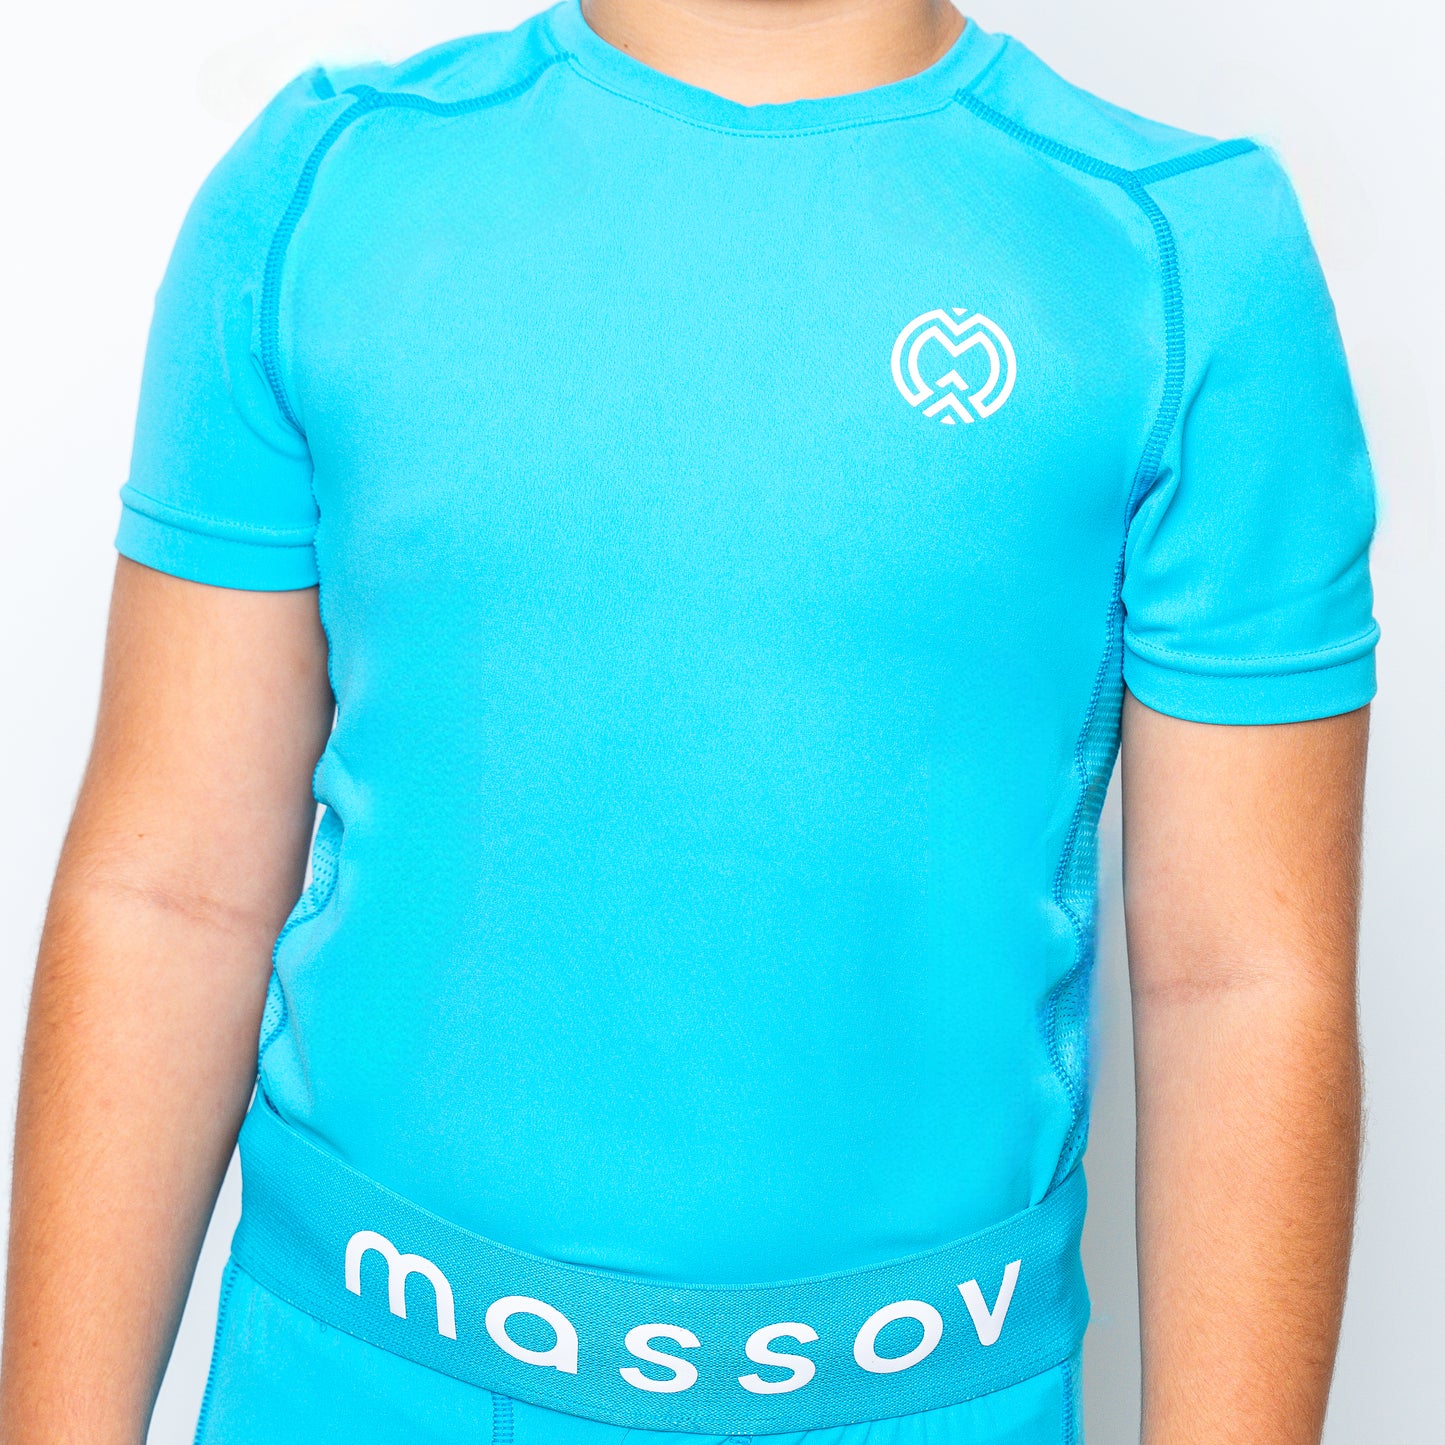 Youth Boy's ProForm® Compression Short-Sleeve Athletic Shirt